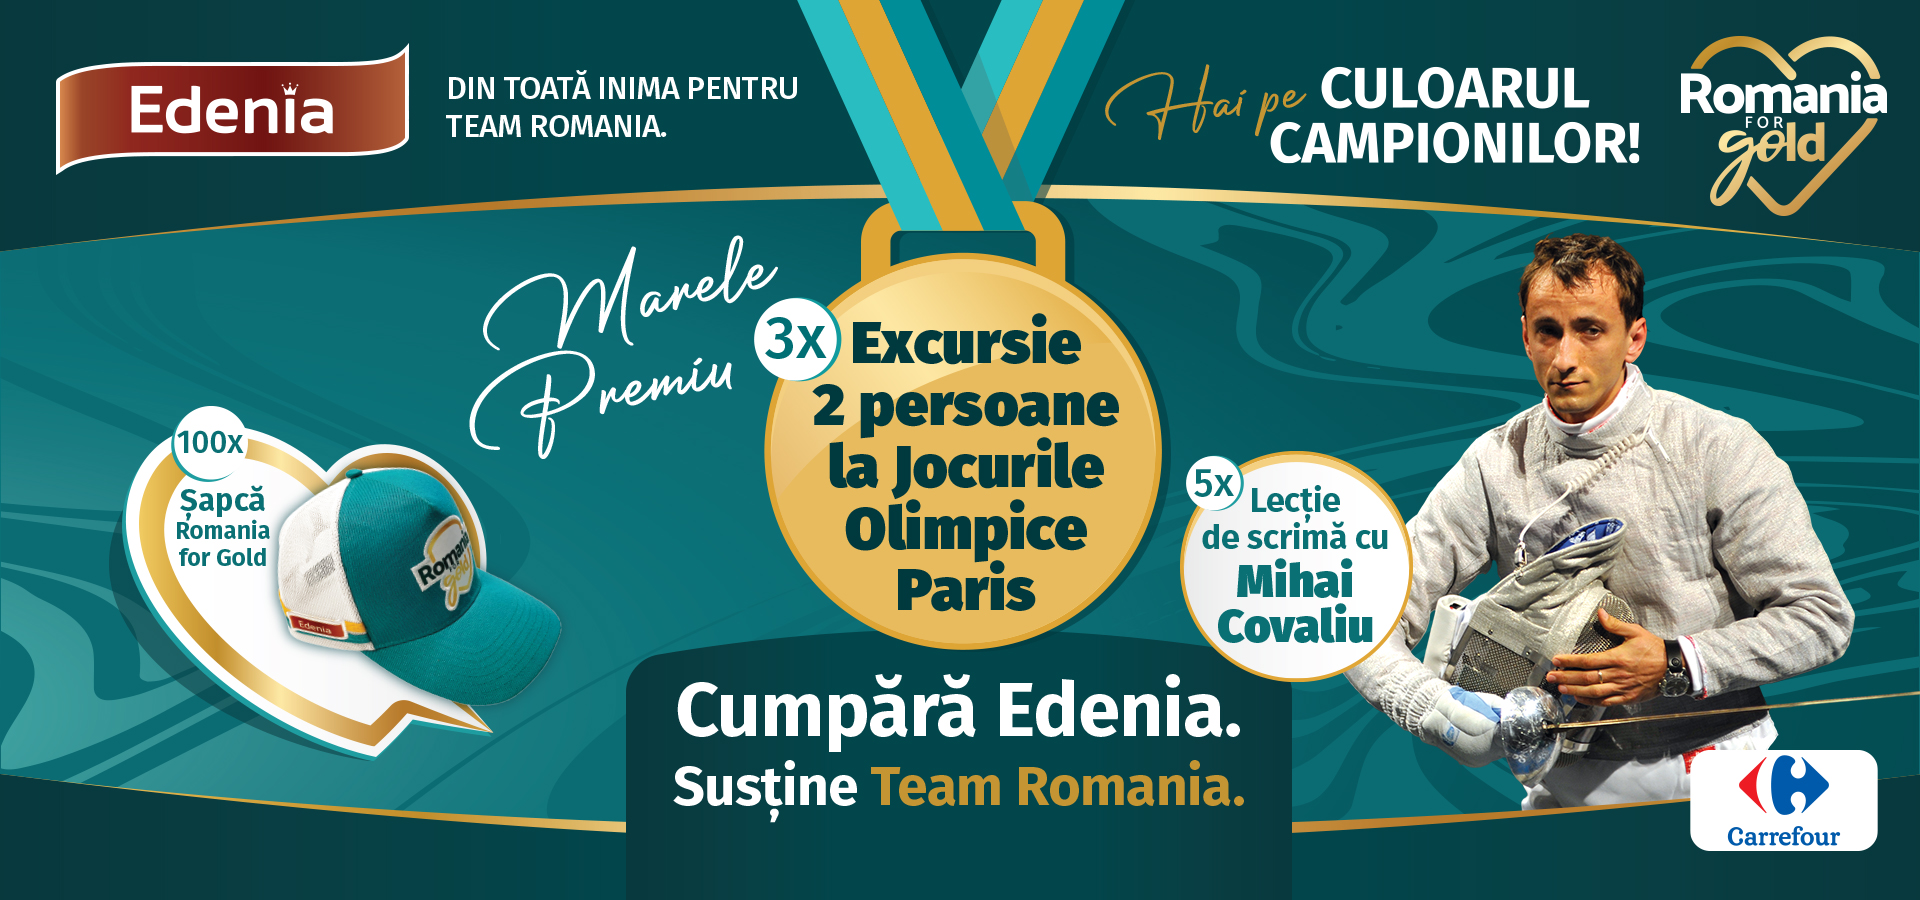 Campanie Edenia - Carrefour